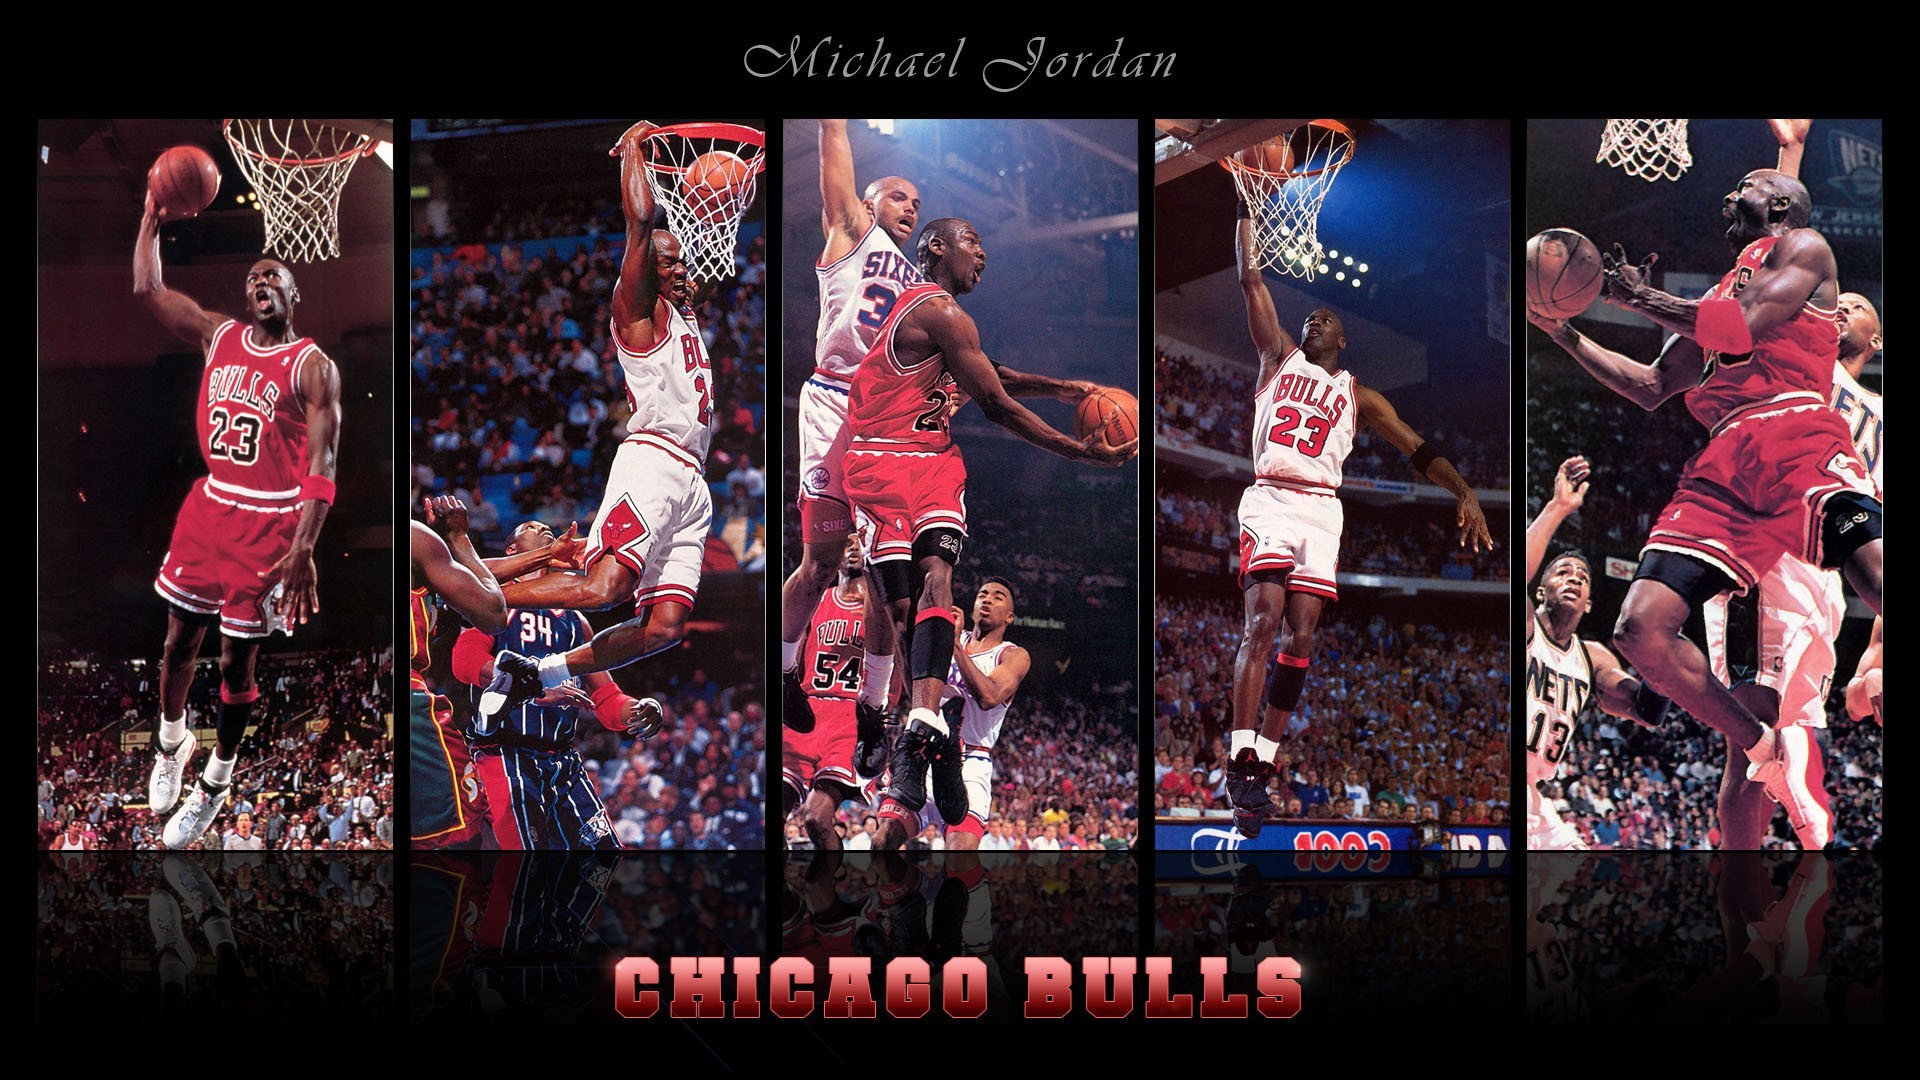 People 1920x1080 basketball Michael Jordan NBA sport collage men jumping Chicago Bulls simple background